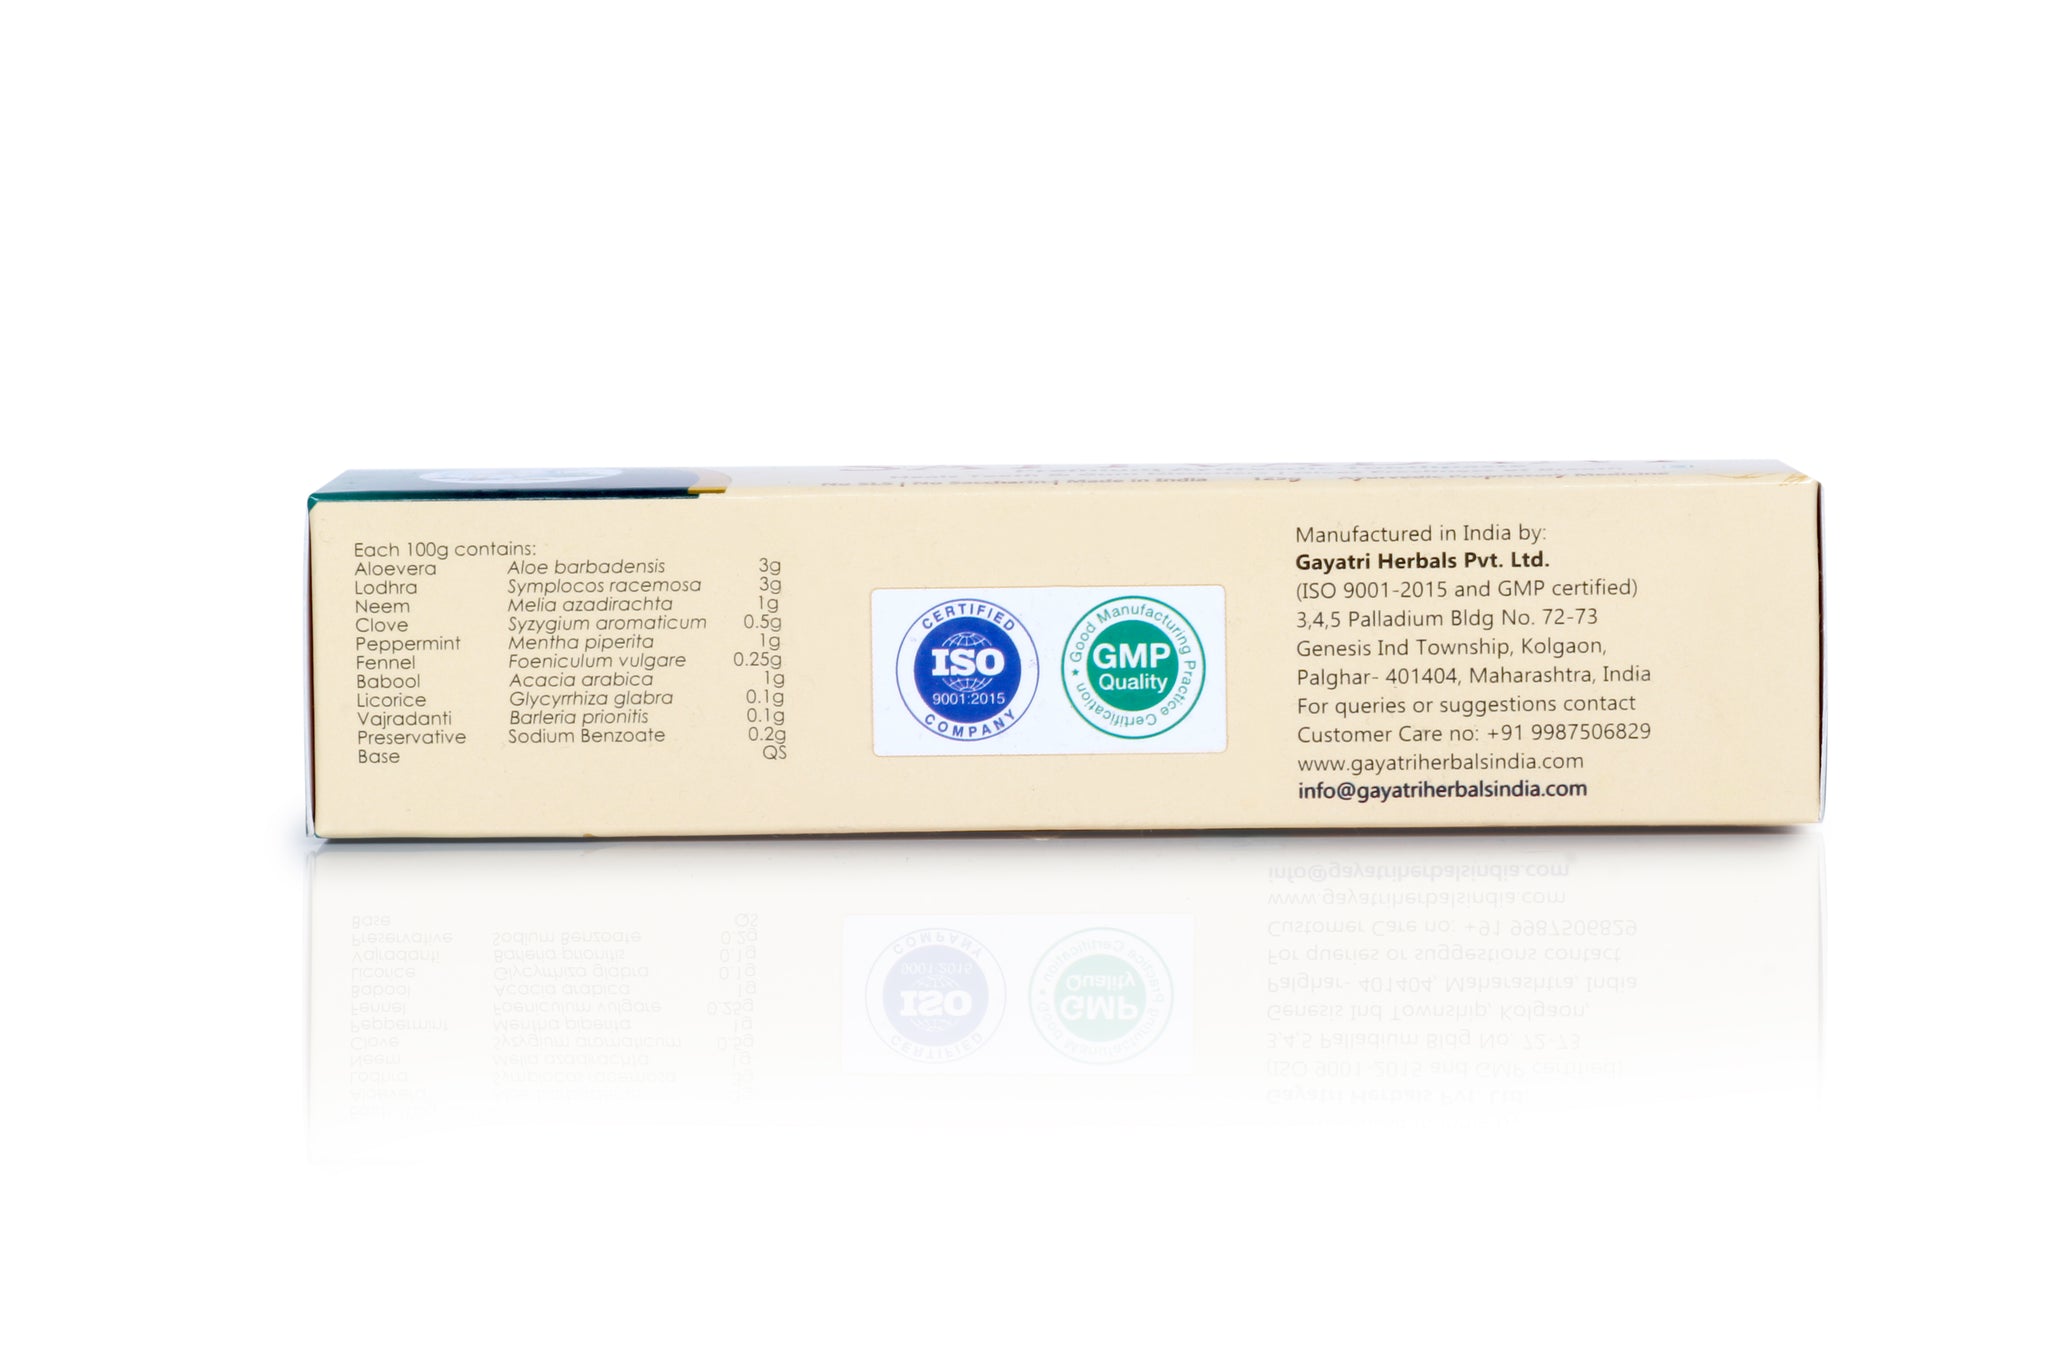 Sattvadant Toothpaste - 125 gms ( No Saccharin I No SLS I No parabens I No synthetic colours )